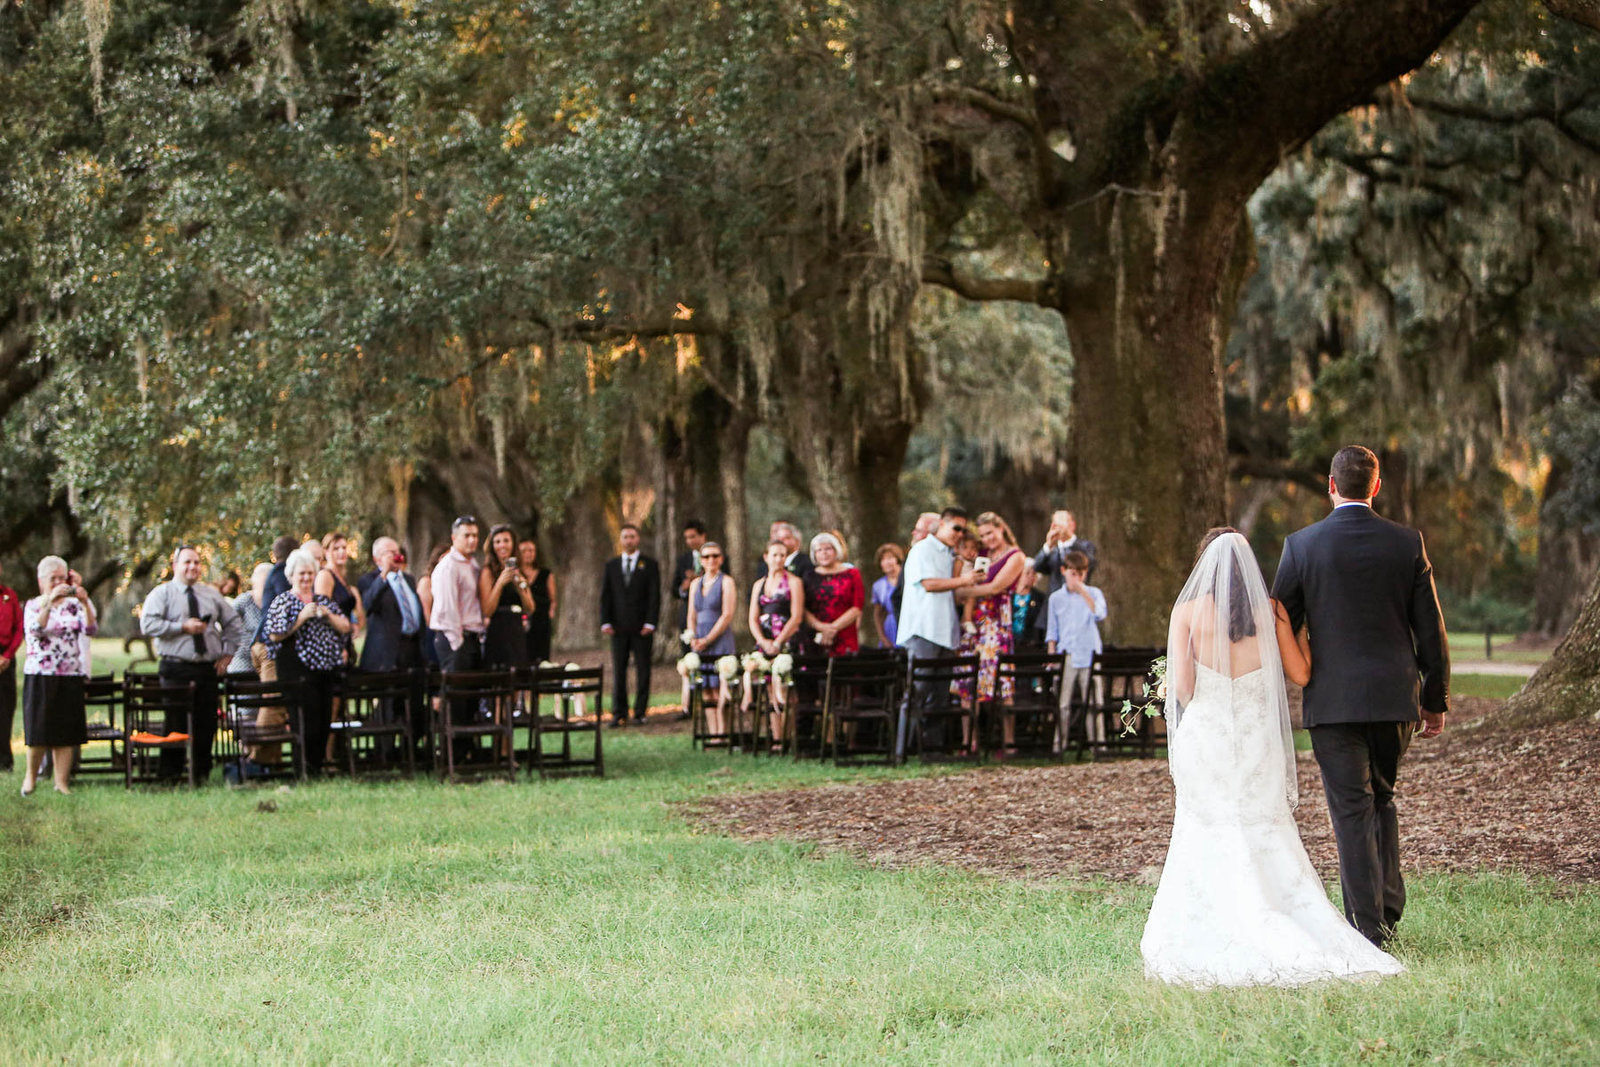 Brother walks bride down the aisle, Boone Hall Plantation, Charleston, South Carolina. Kate Timbers Photography.